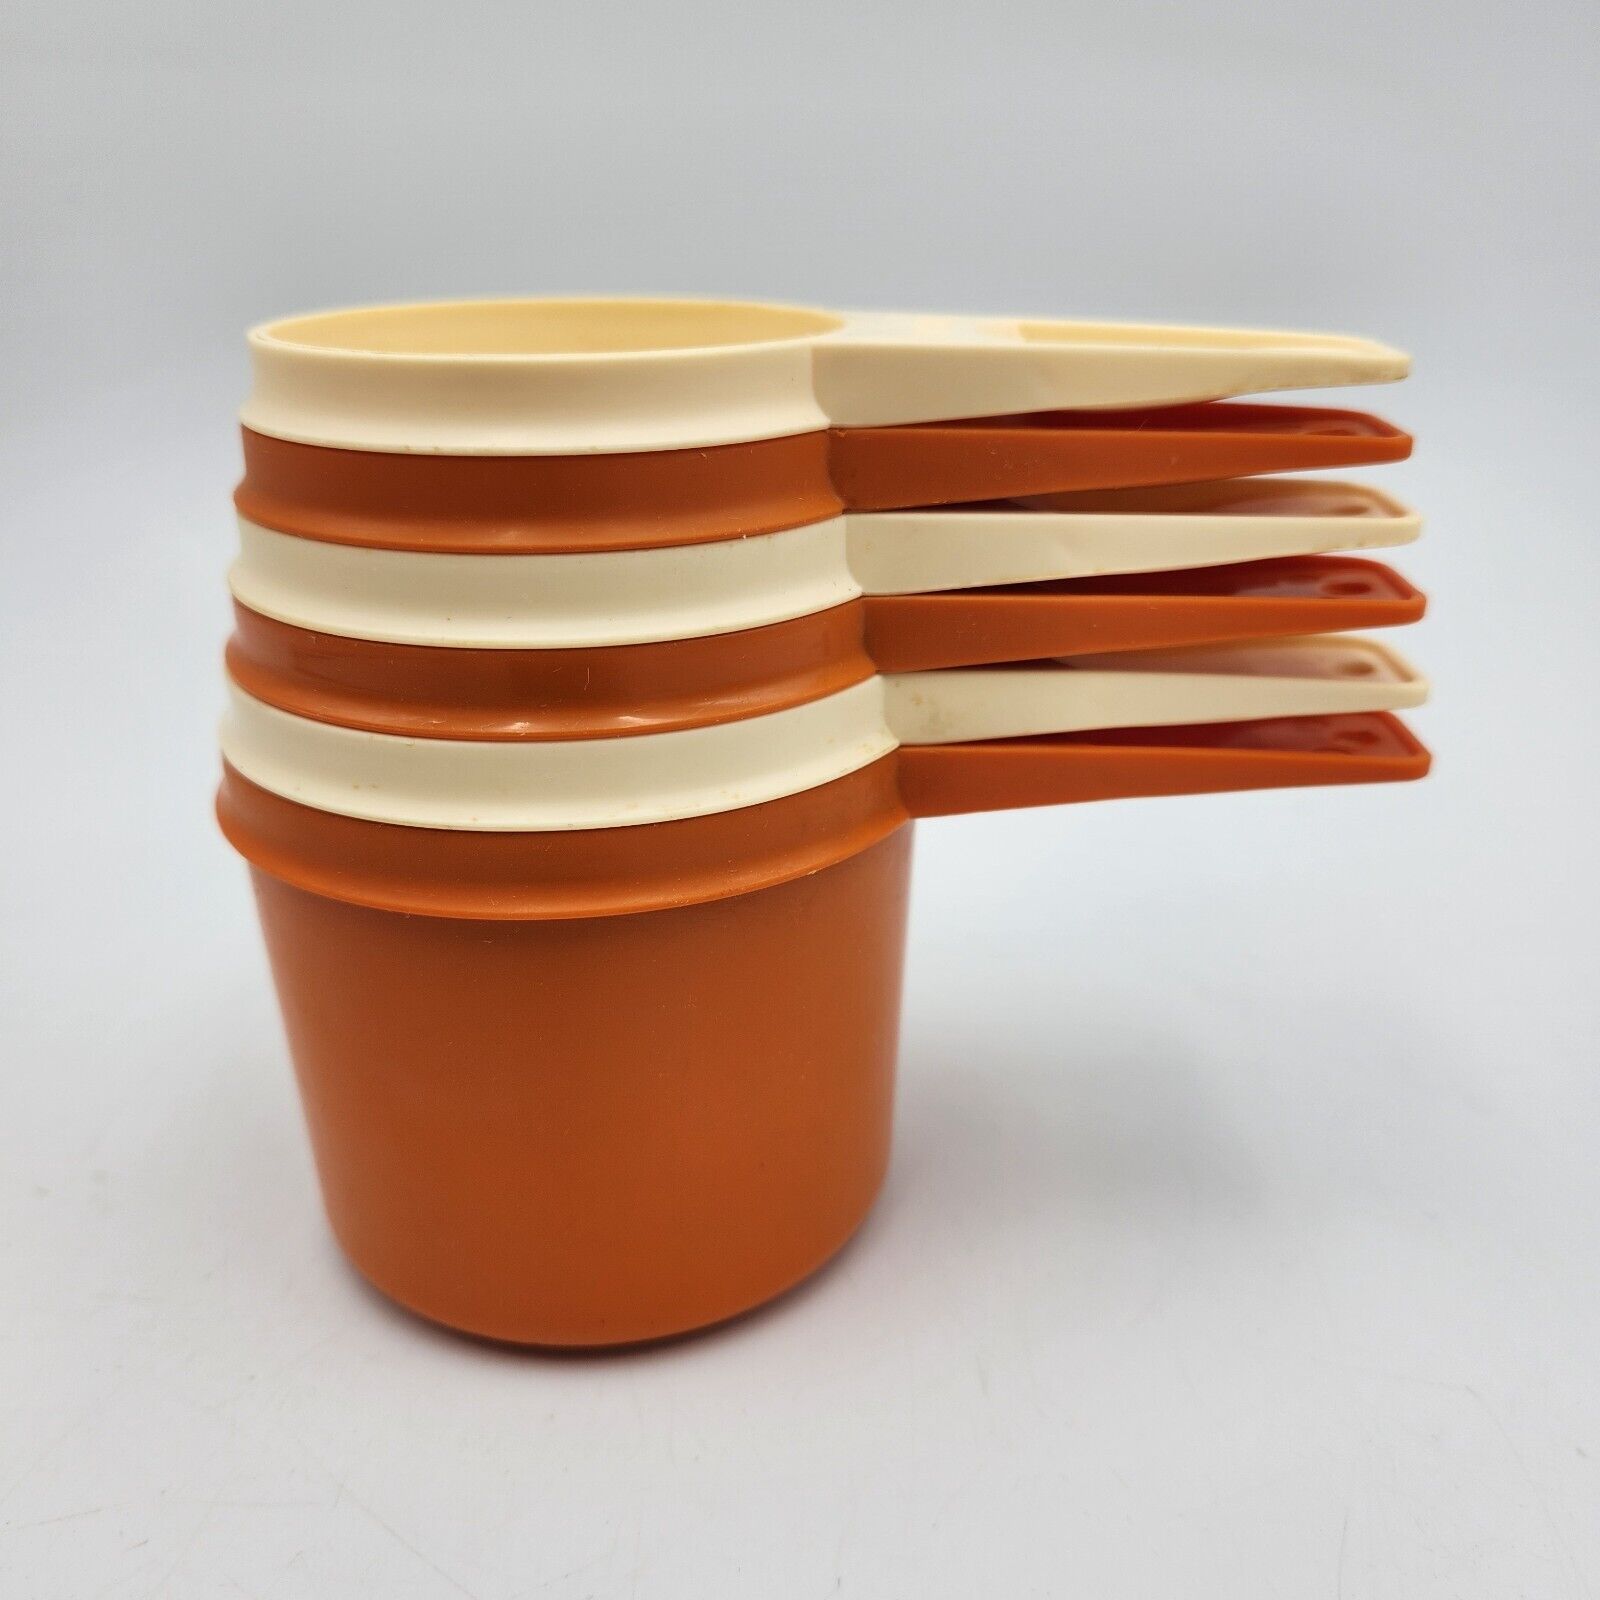 Vintage Tupperware Nesting Measuring Cups Set Of 6 Mixed Orange Cream Colors